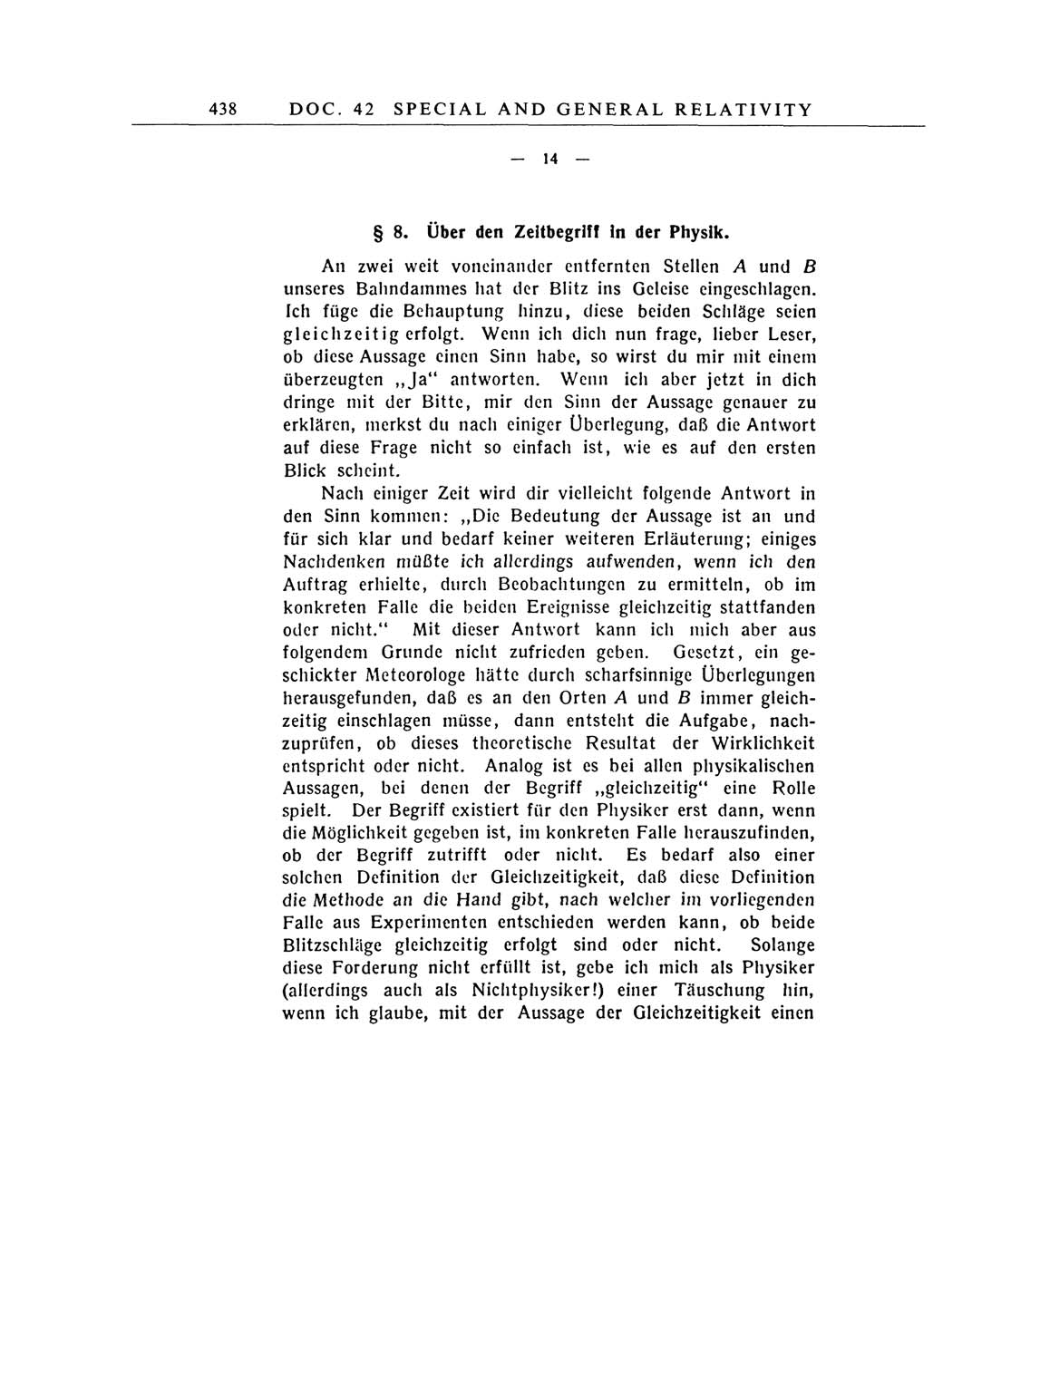 Volume 6: The Berlin Years: Writings, 1914-1917 page 438